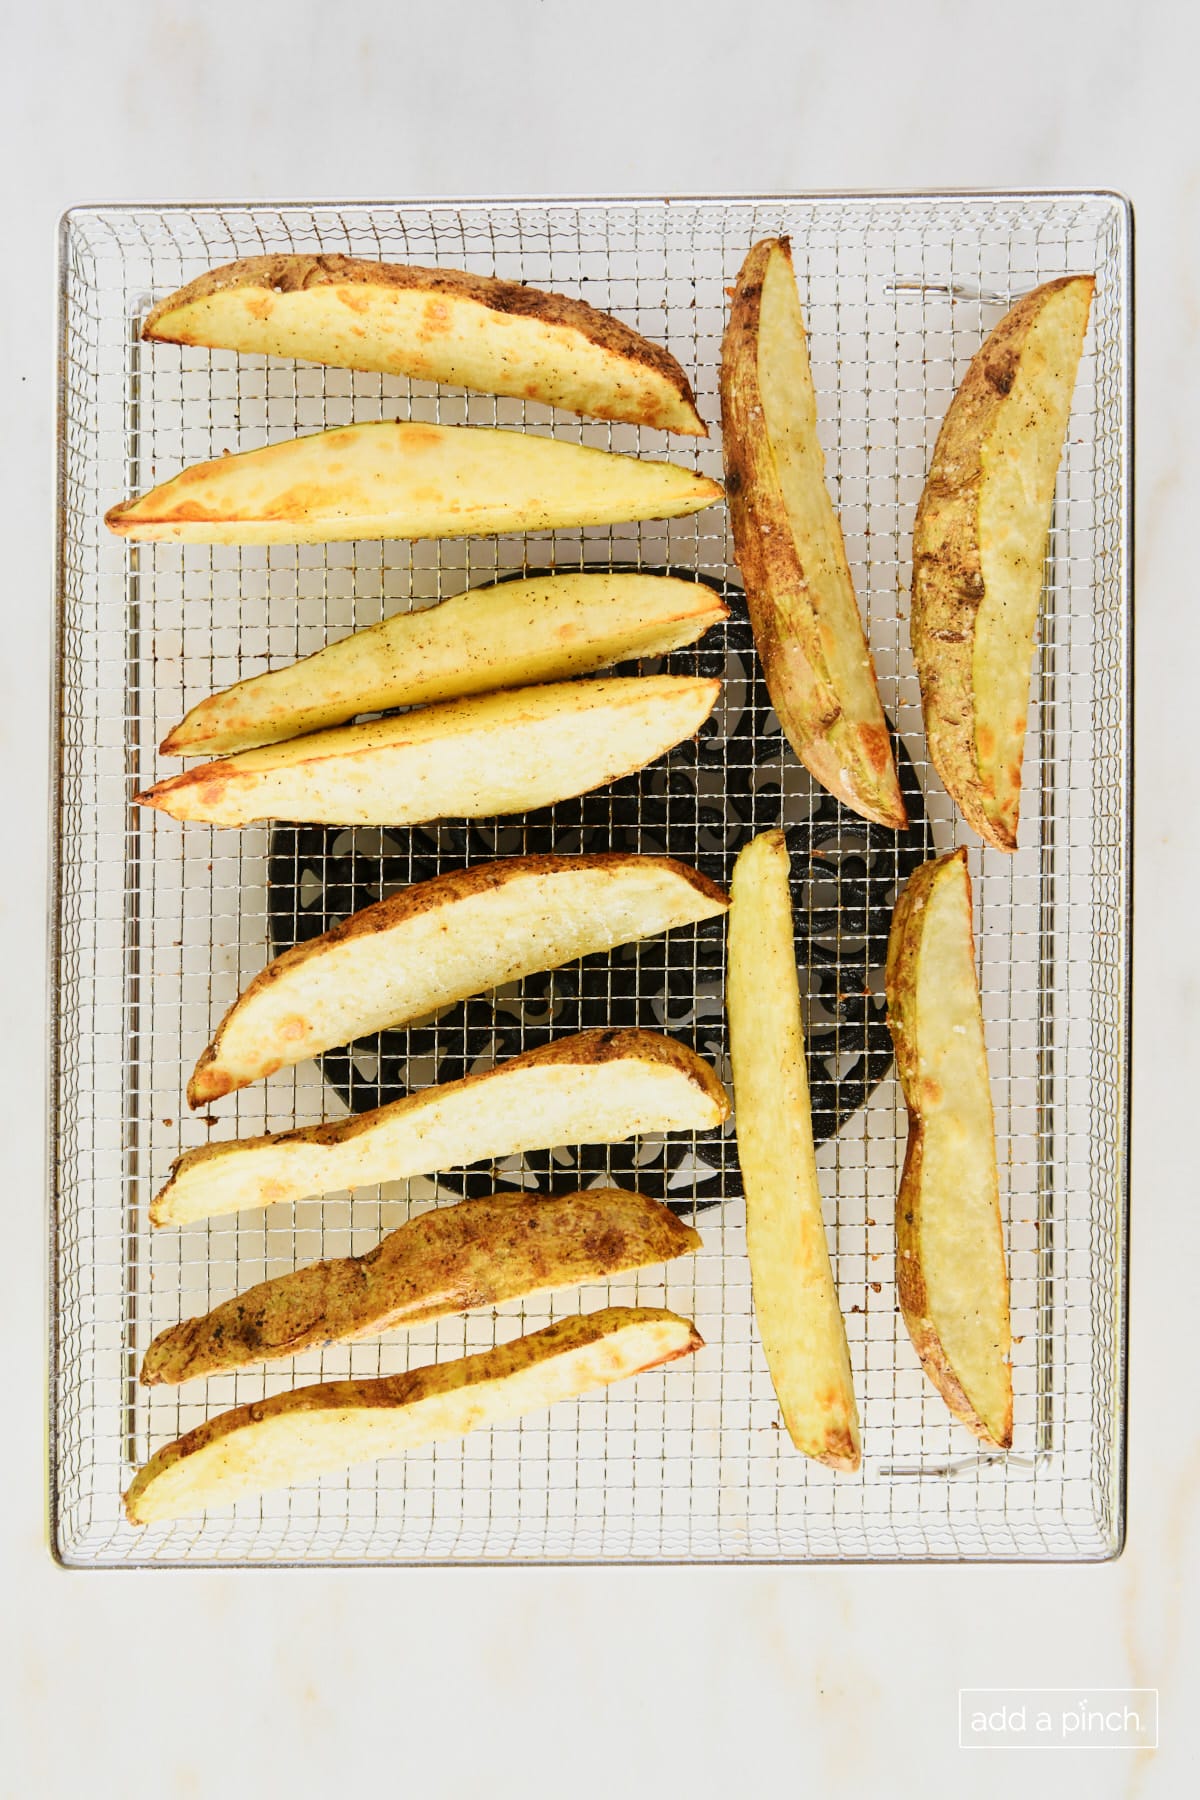 Crispy air fryer potato wedges on a air fryer basket.